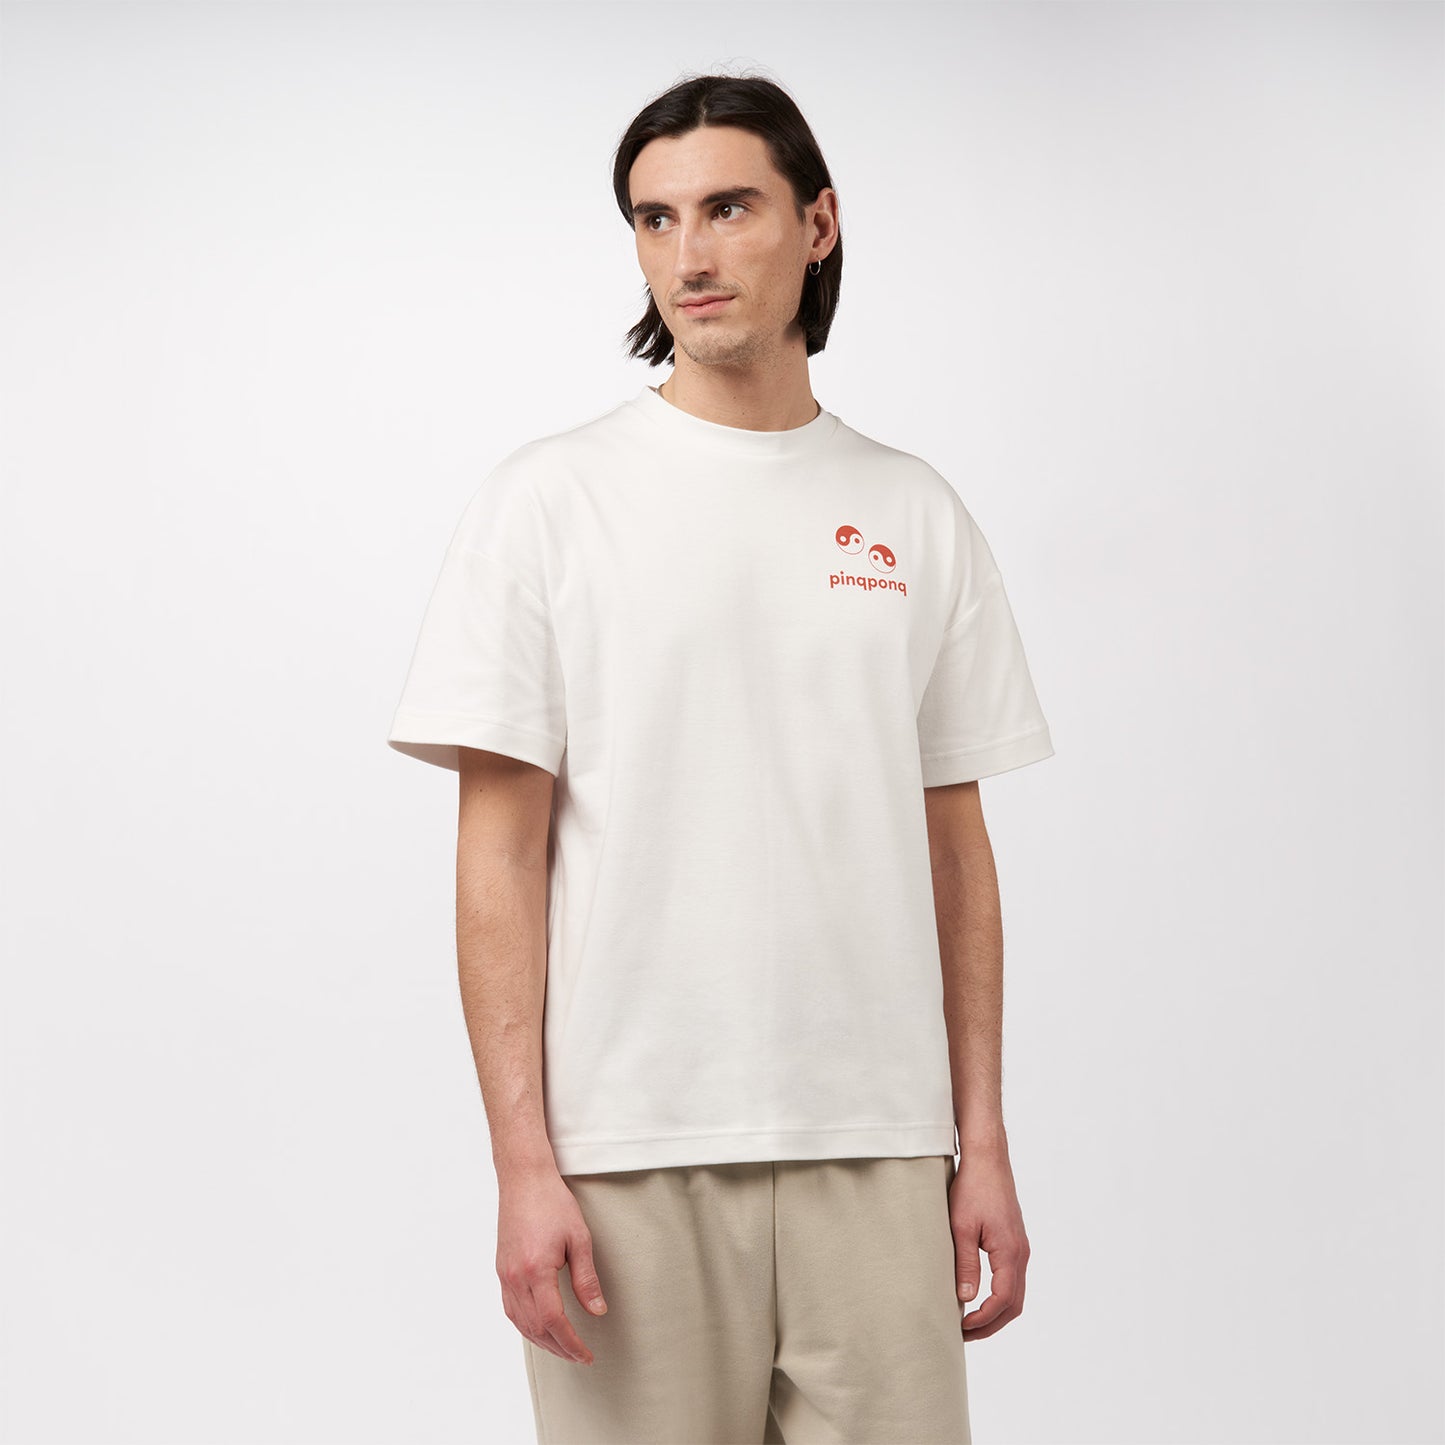 pinqponq-T-Shirt-Unisex-Dandelion-White-Yin-Yang-unisex-model-front